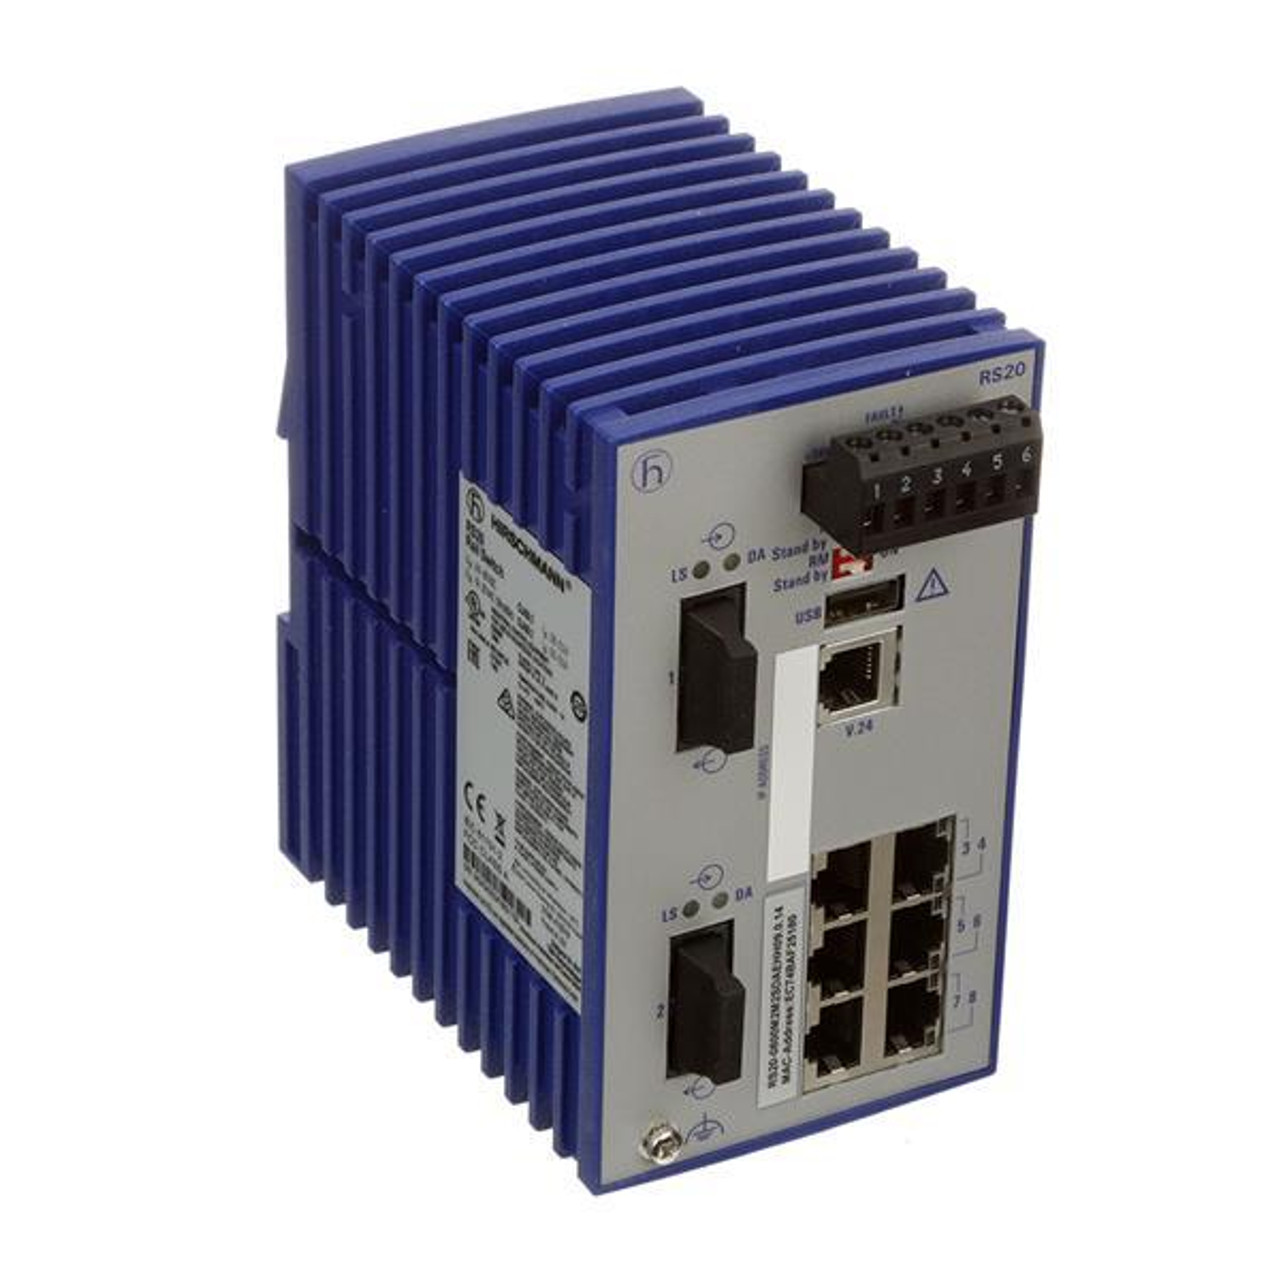 Hirschmann 8-Ports Industrial (6)Standard 10/100 Basetx Rj45 Switch Managed (Refurbished)